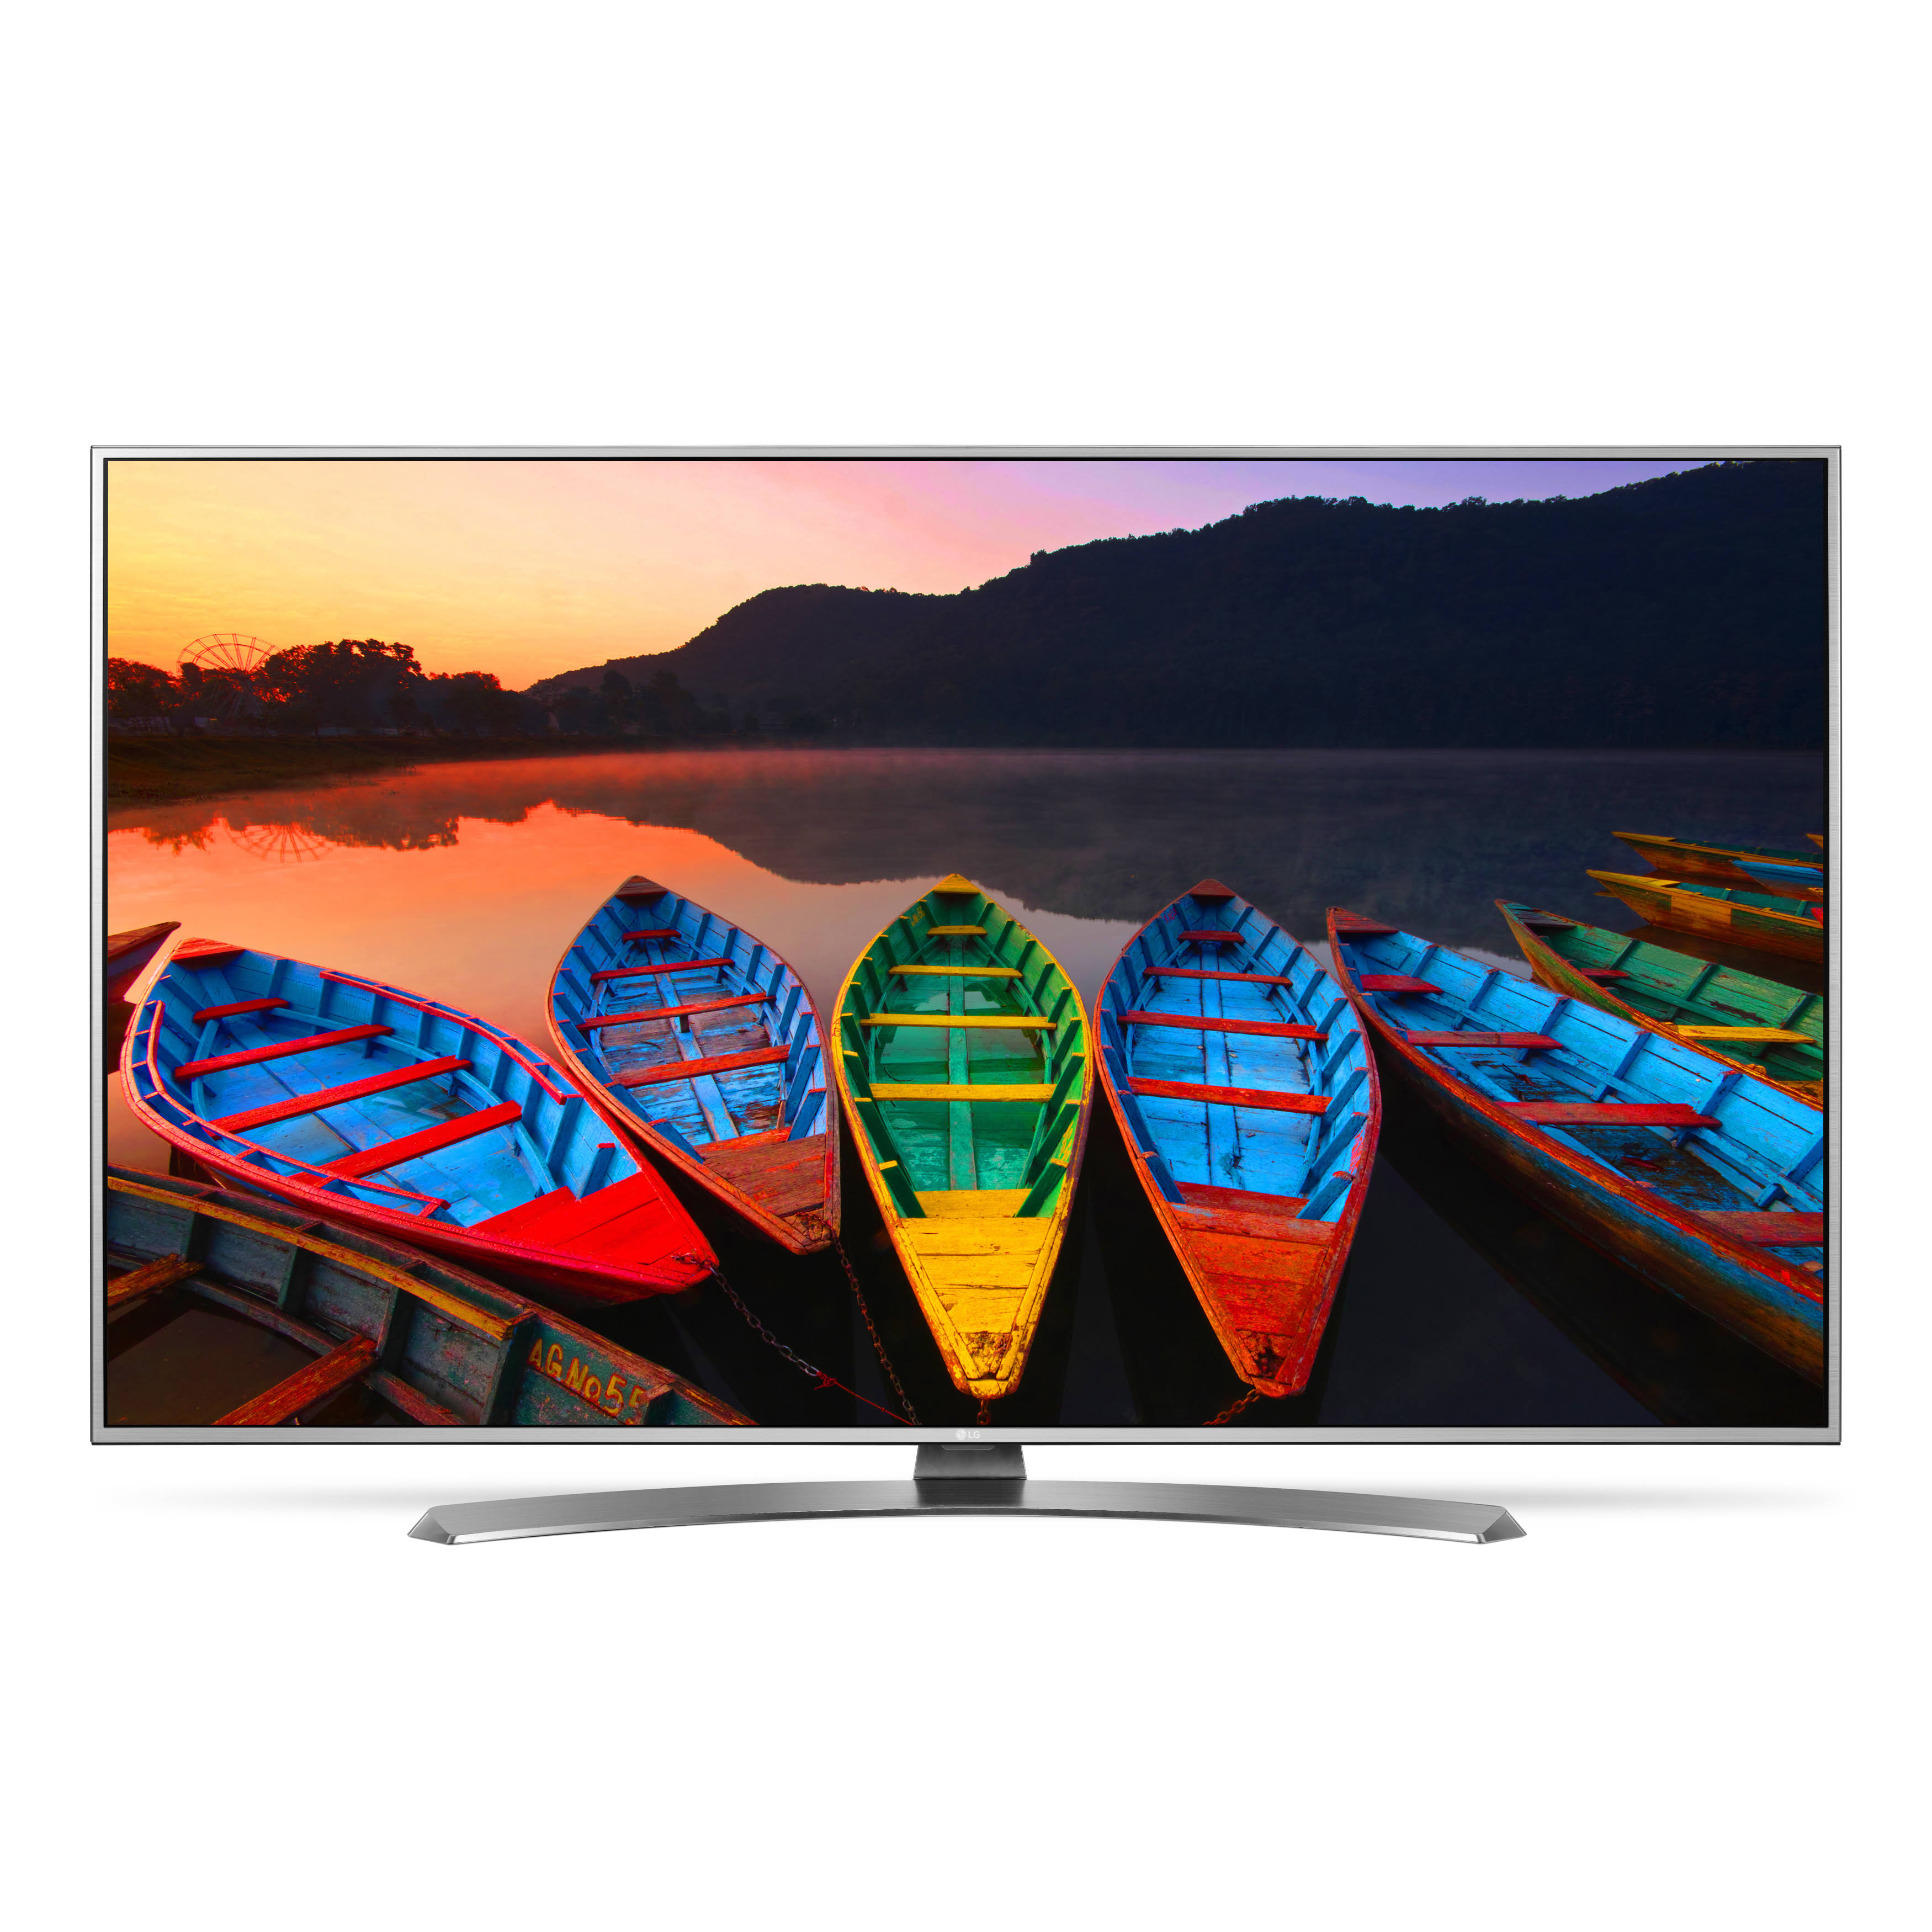 LG Электроника 55UH7700 55-дюймовый 4K Ultra HD Smart LED TV (модель 2016 г.)